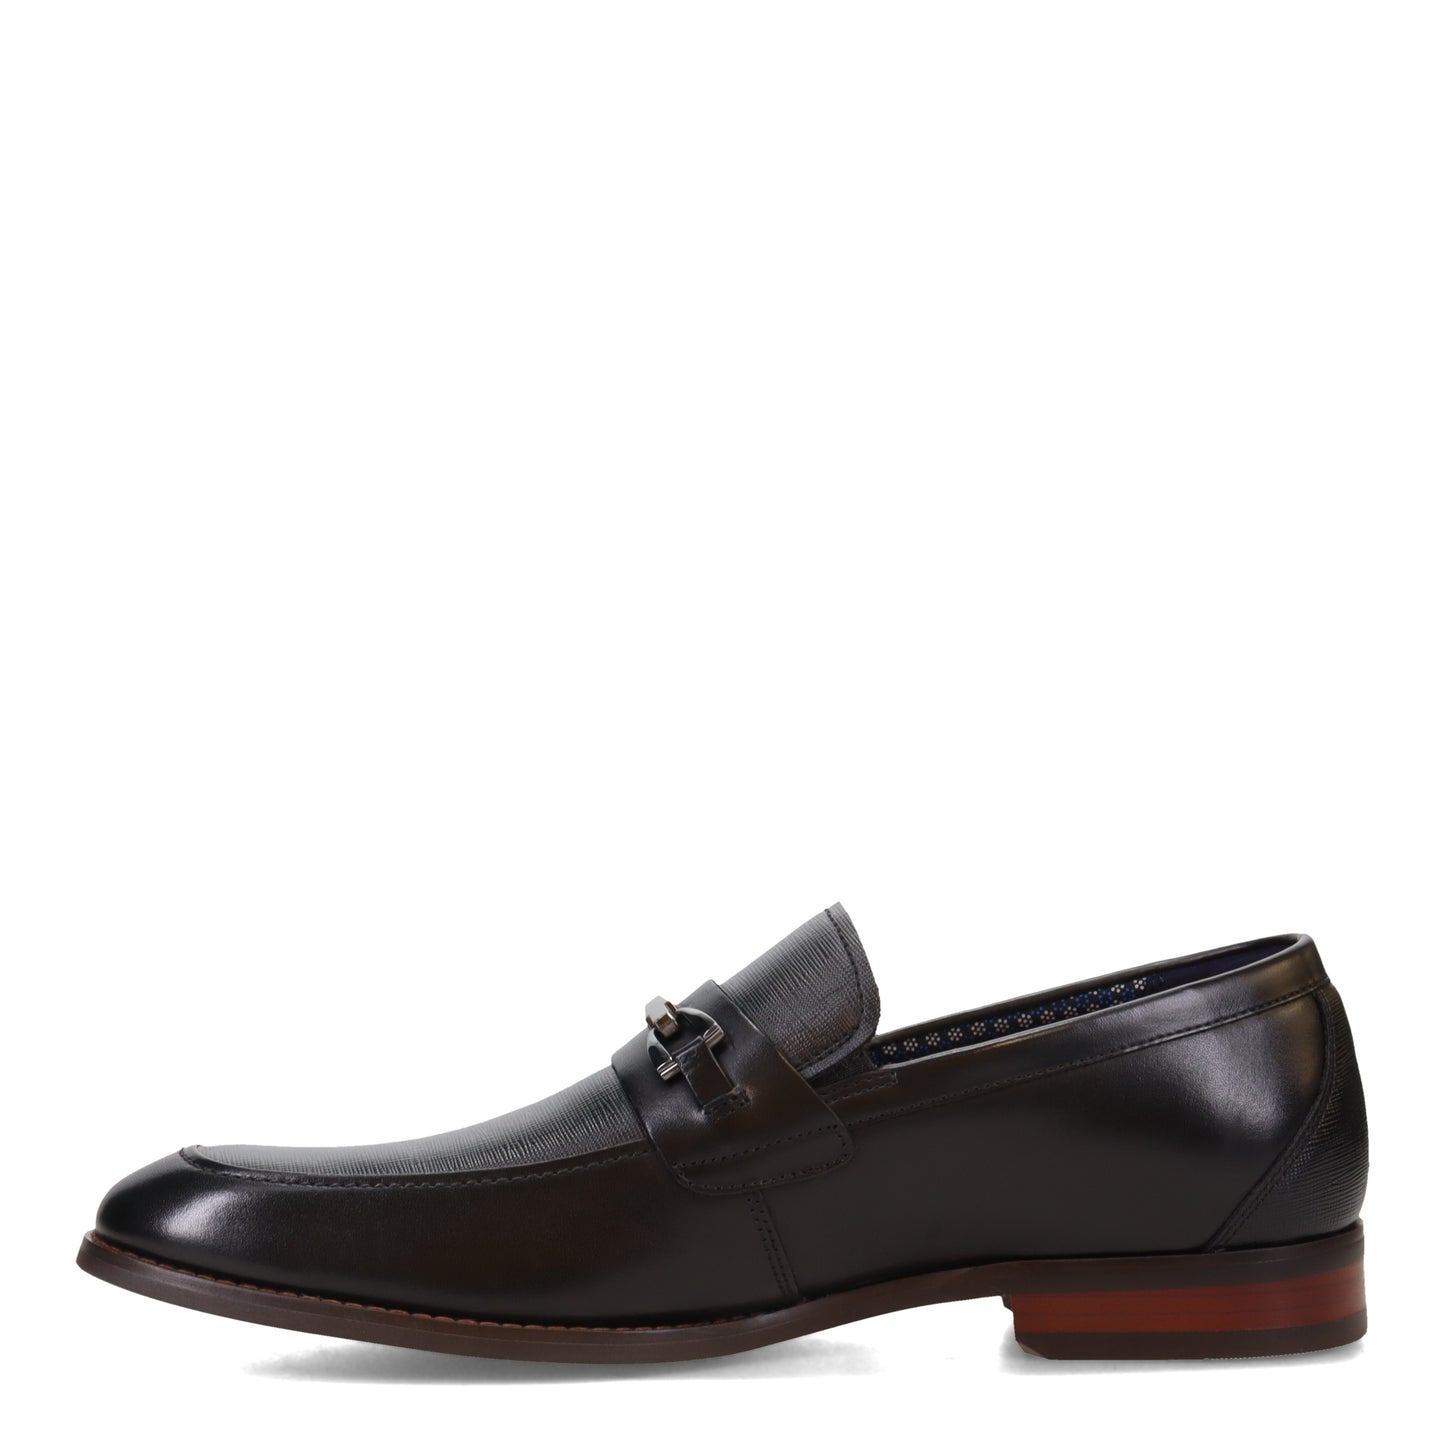 Peltz Shoes  Men's Stacy Adams Kaylor Moc Toe Bit Slip-On BLACK 25572-001